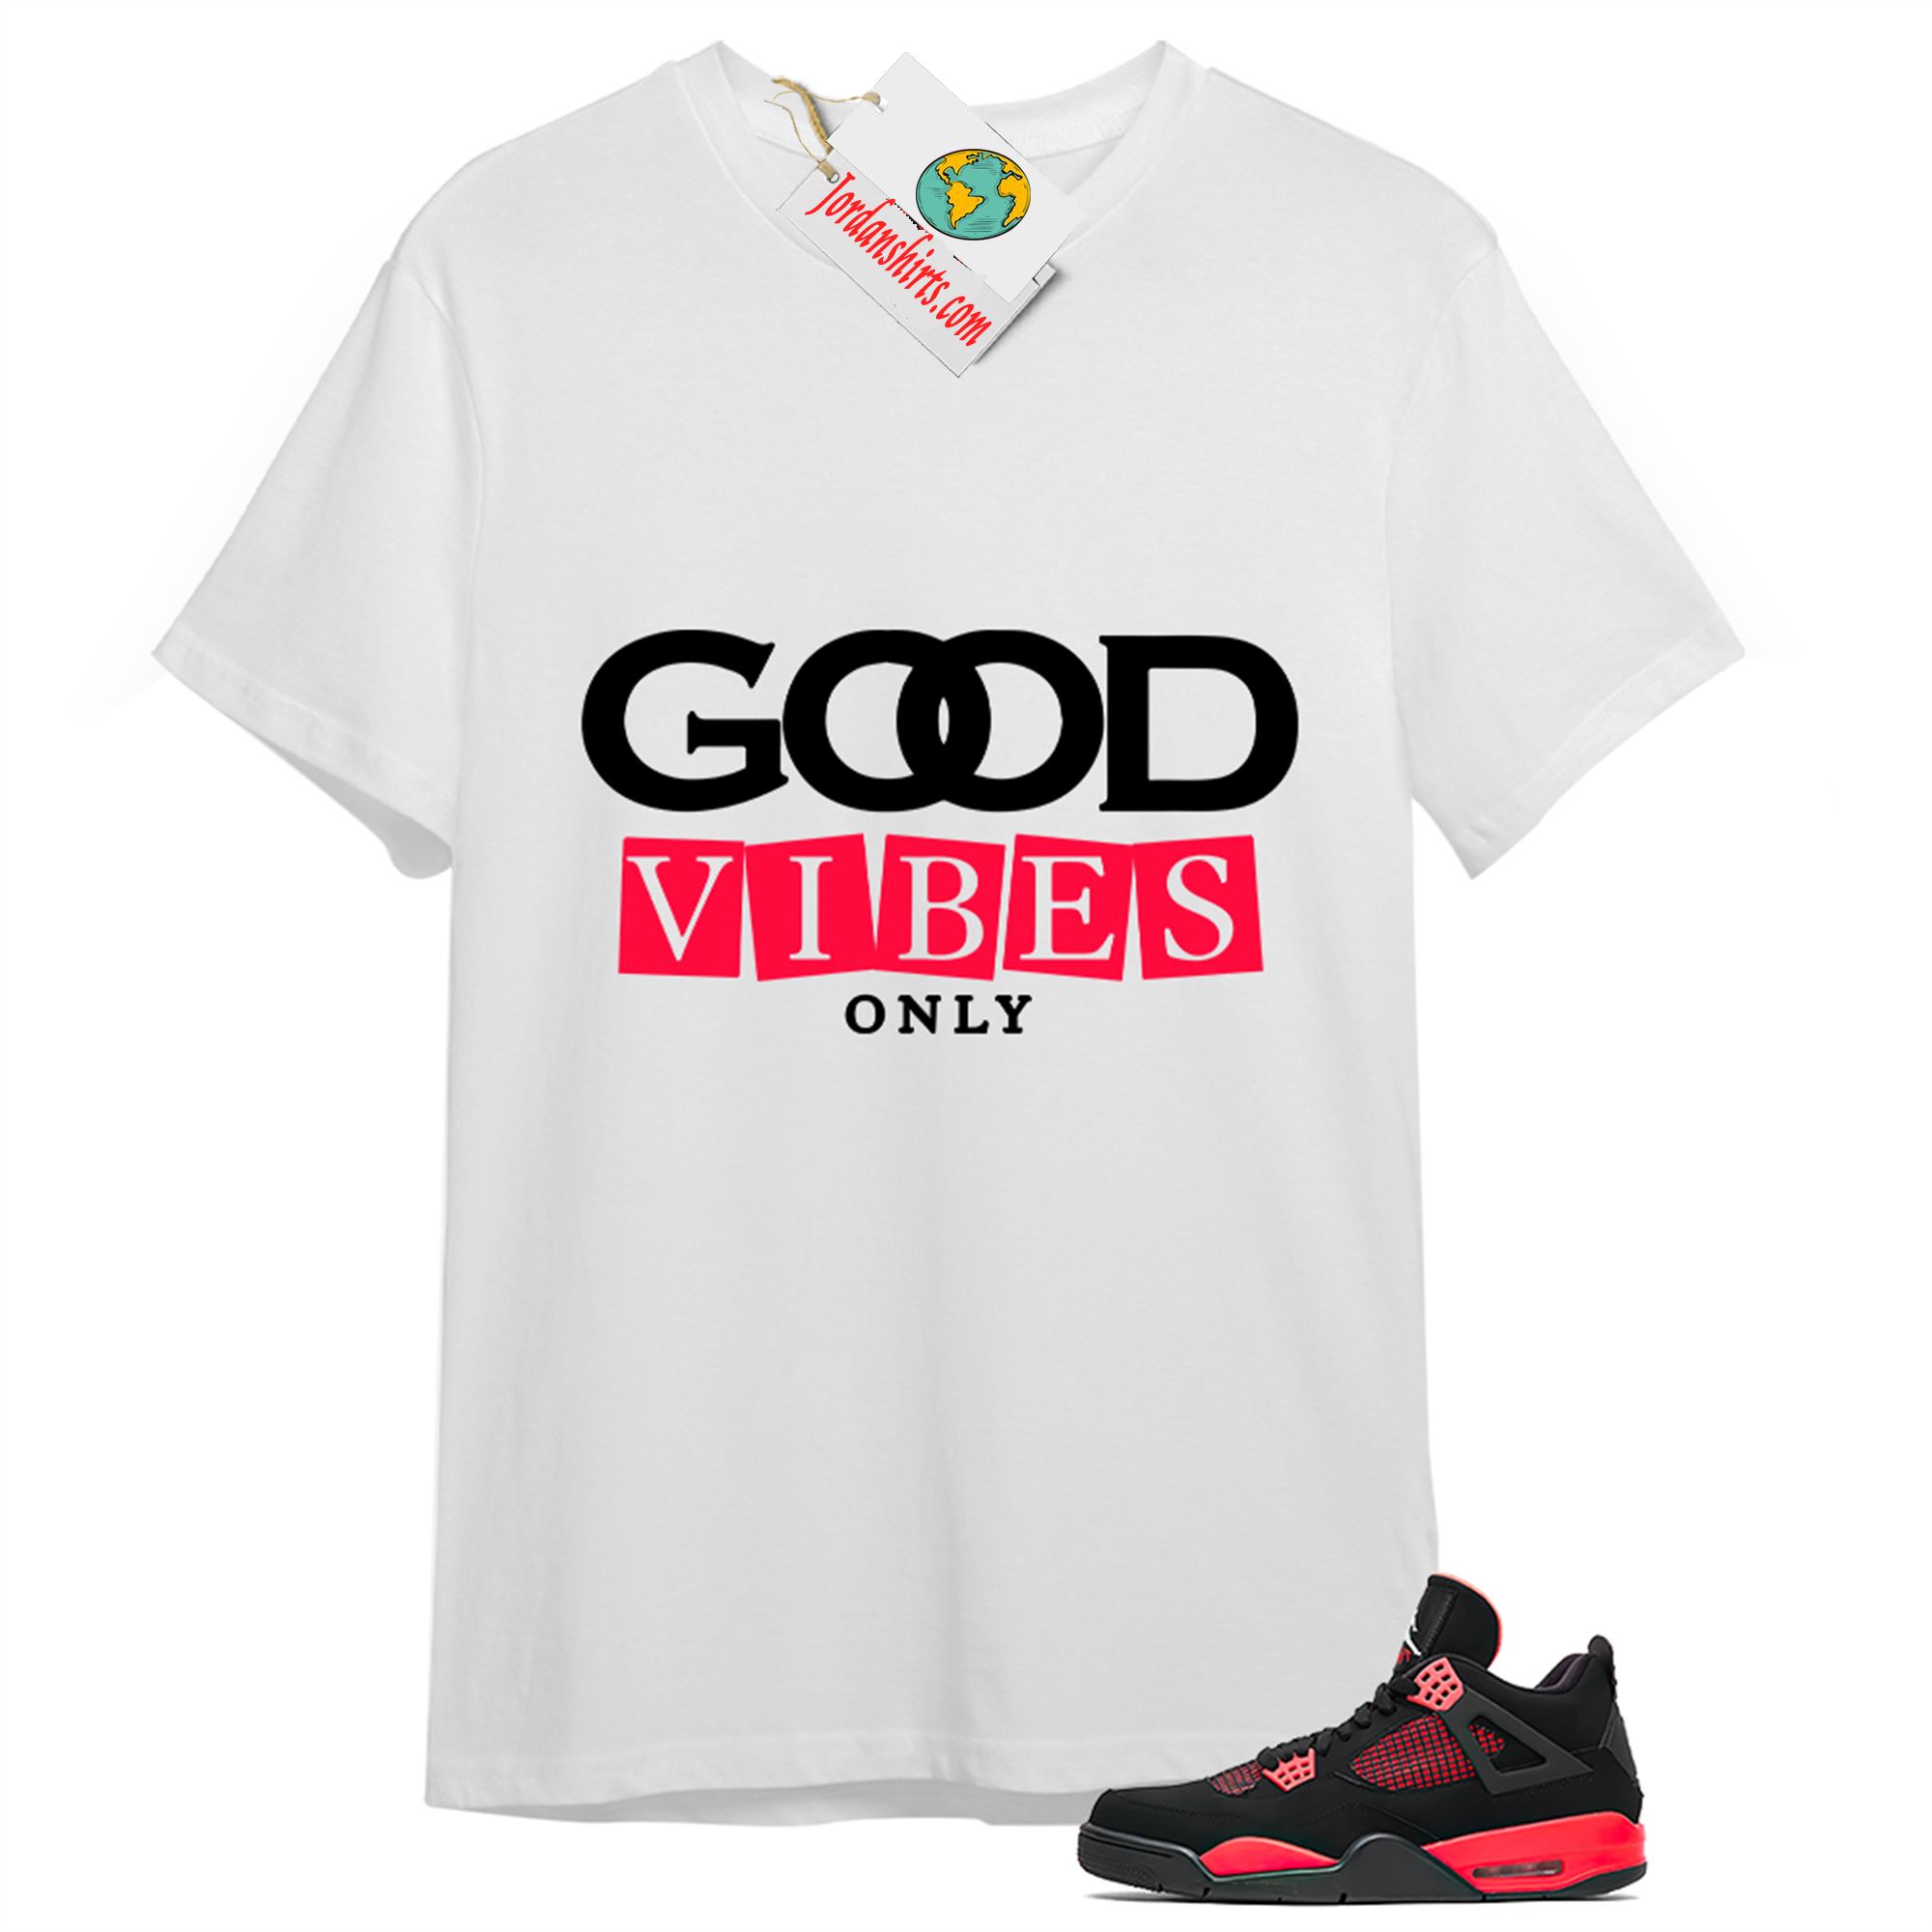 Jordan 4 Shirt, Good Vibes Only White T-shirt Air Jordan 4 Red Thunder 4s Plus Size Up To 5xl